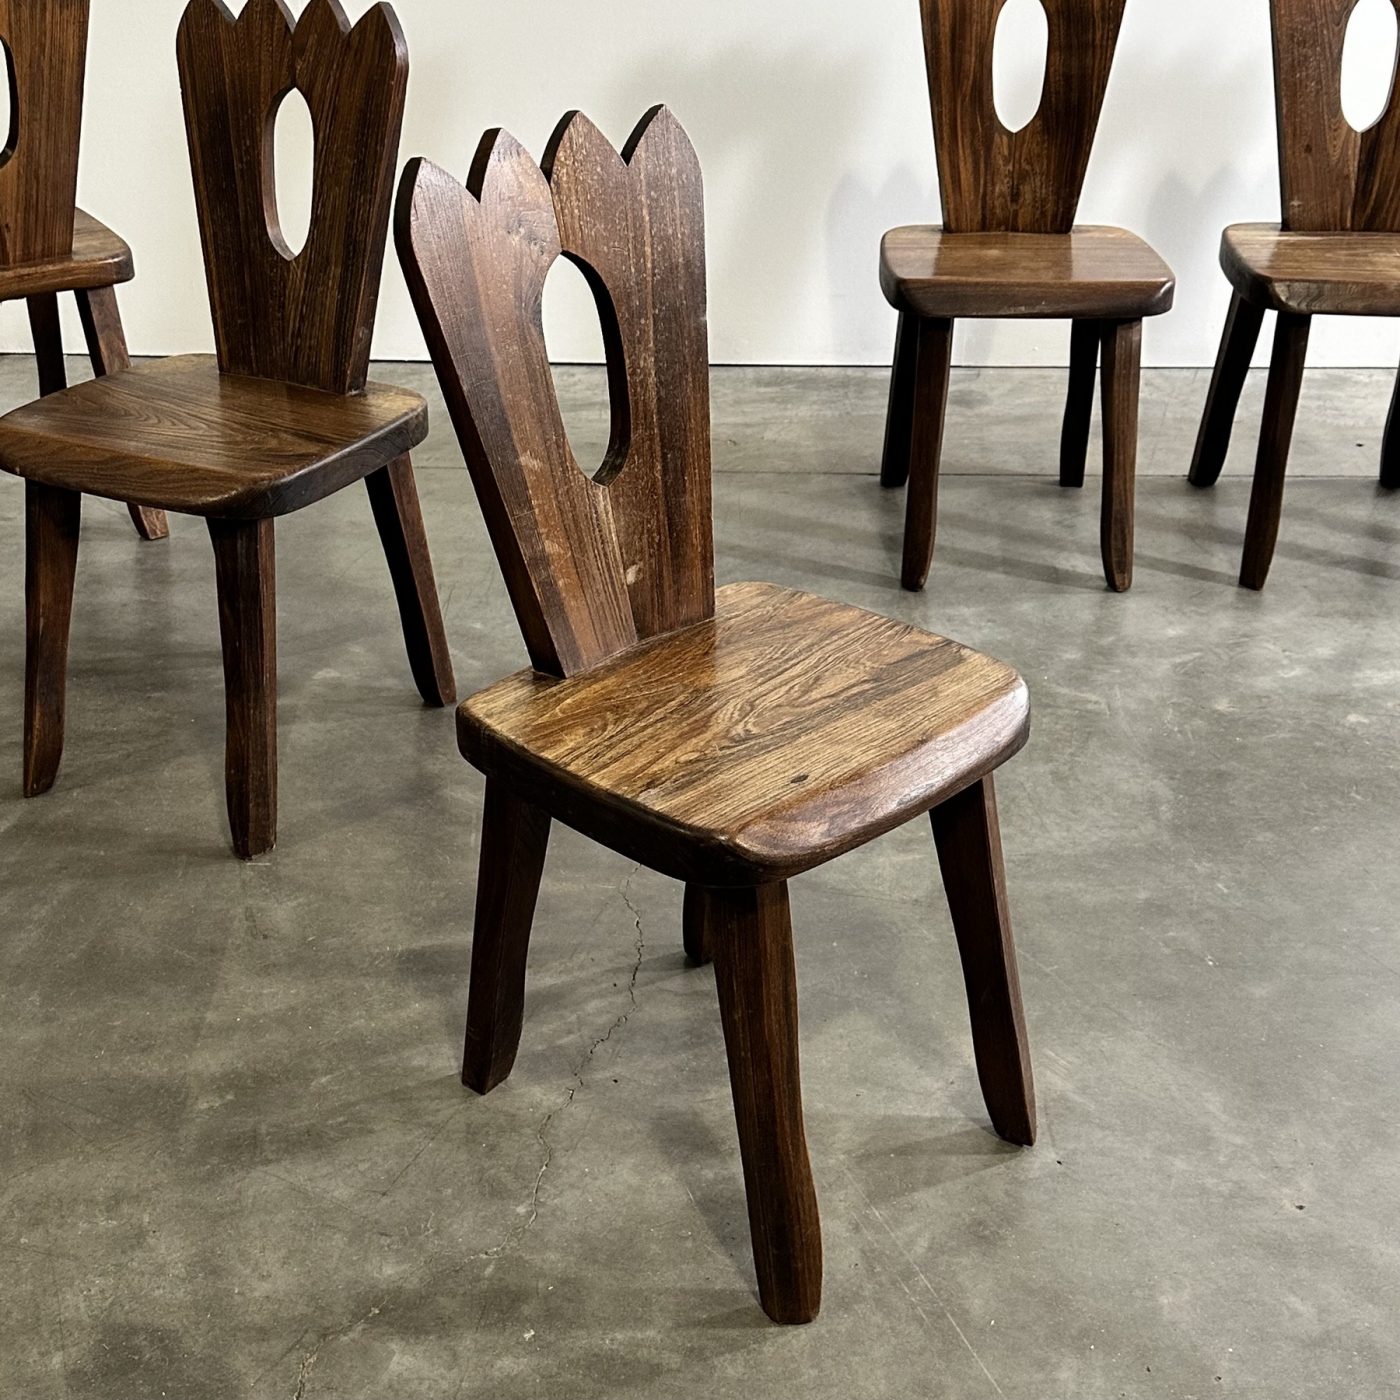 objet-vagabond-brutalist-chairs0003